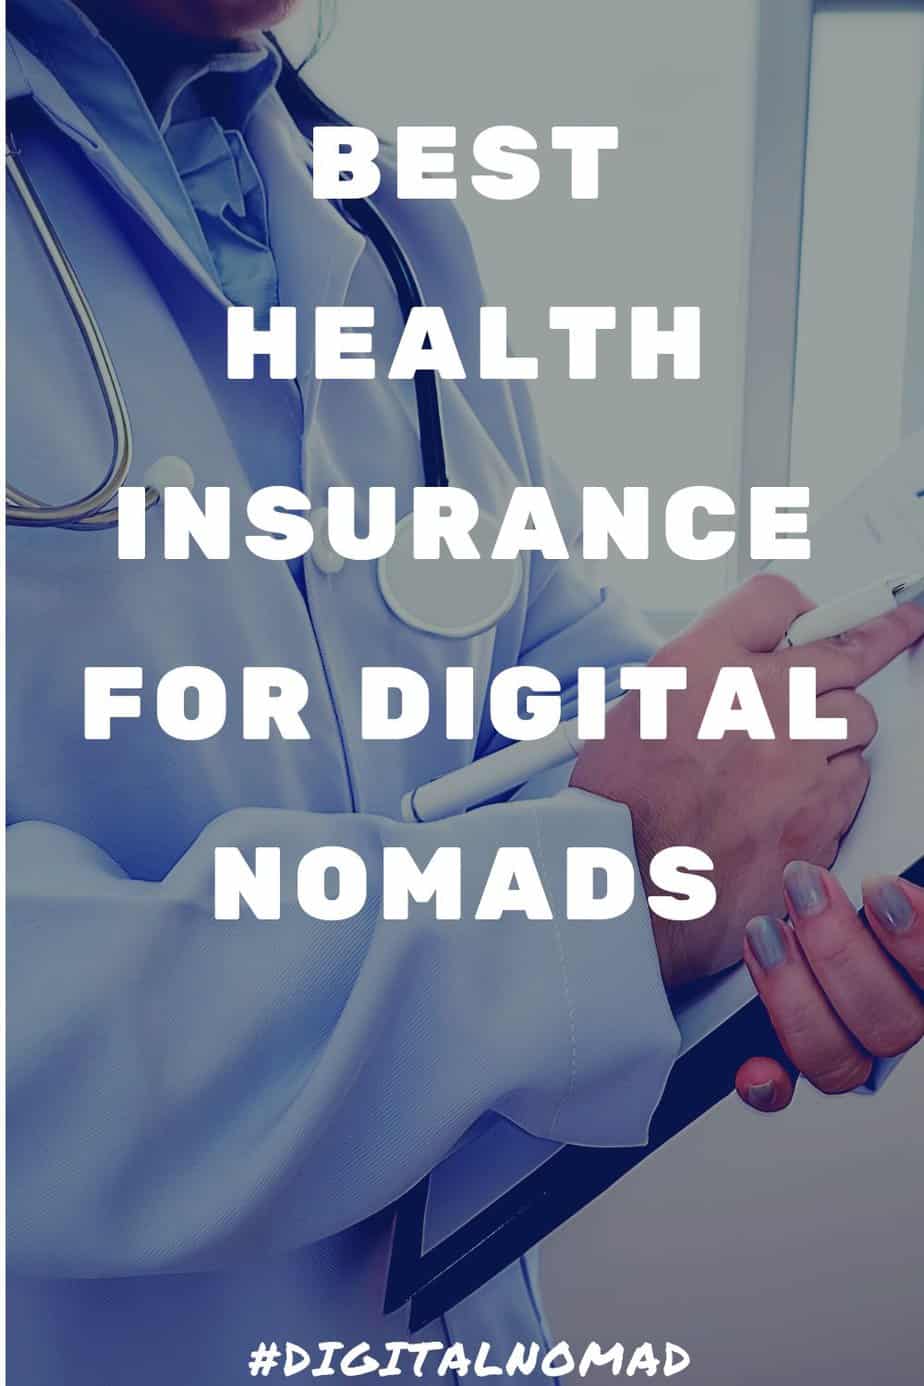 Best health insurance for digital nomads